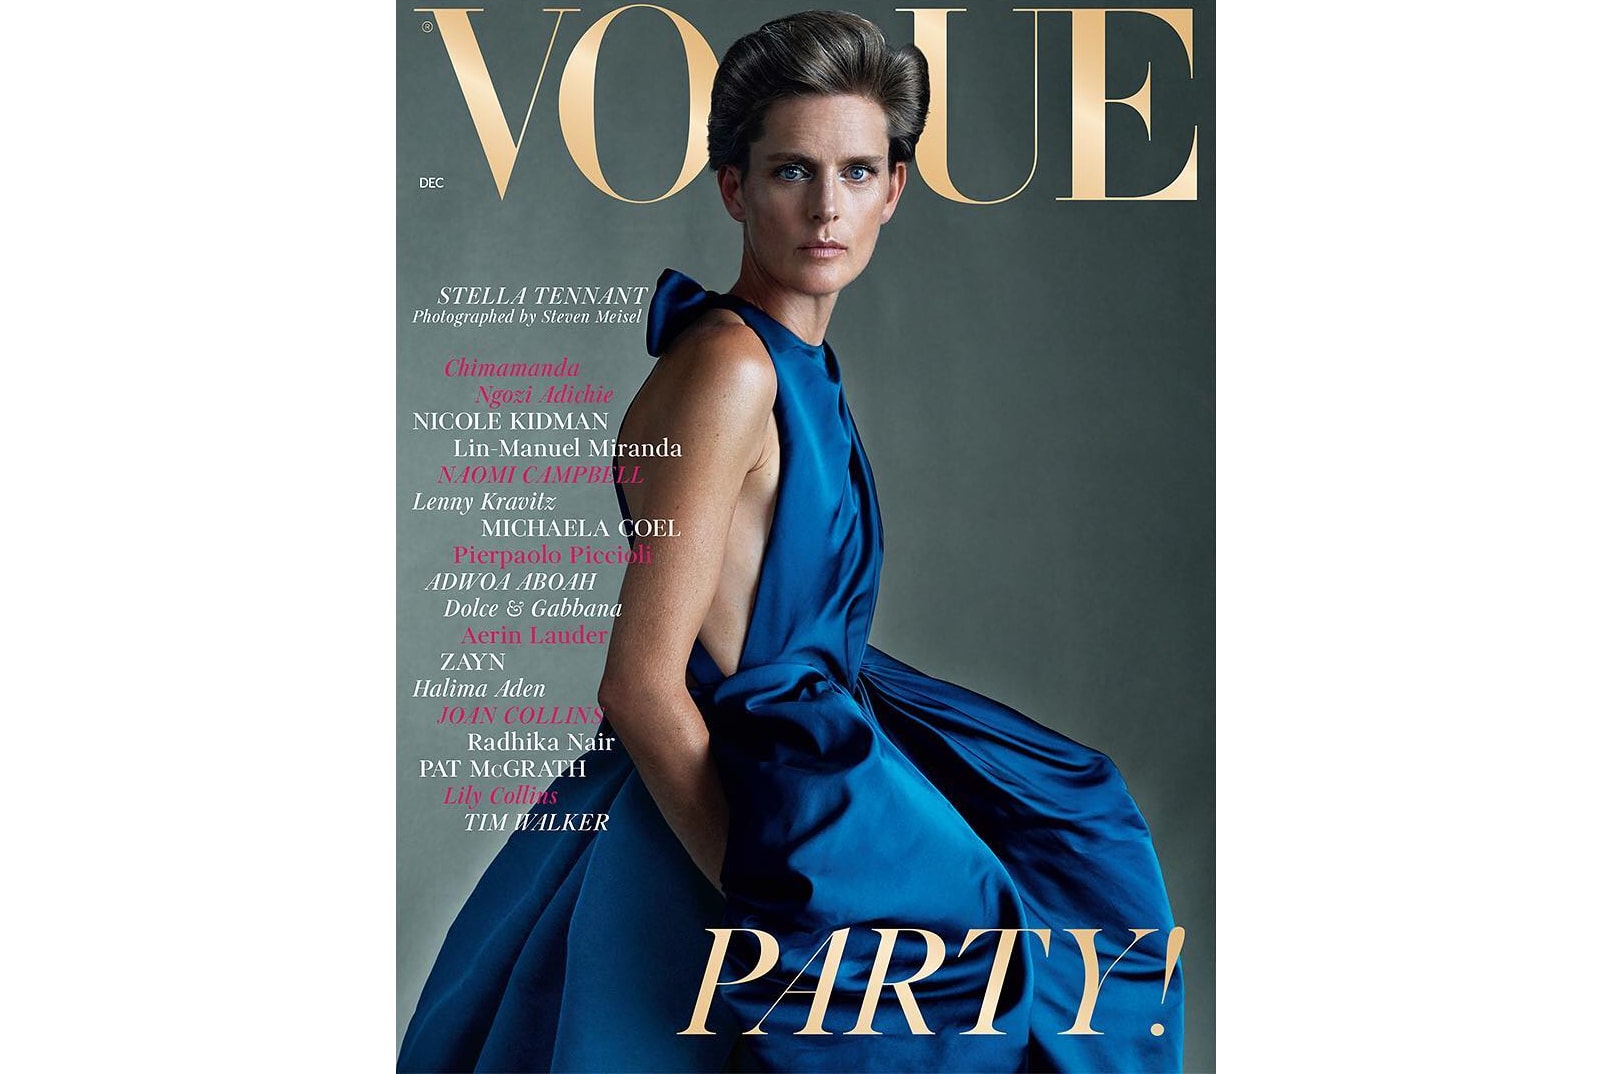 Edward Enninful 1 Year at British Vogue Cover Fashion Editorial Adut Akech Stella Tennant Saffron Vadher Primrose Archer